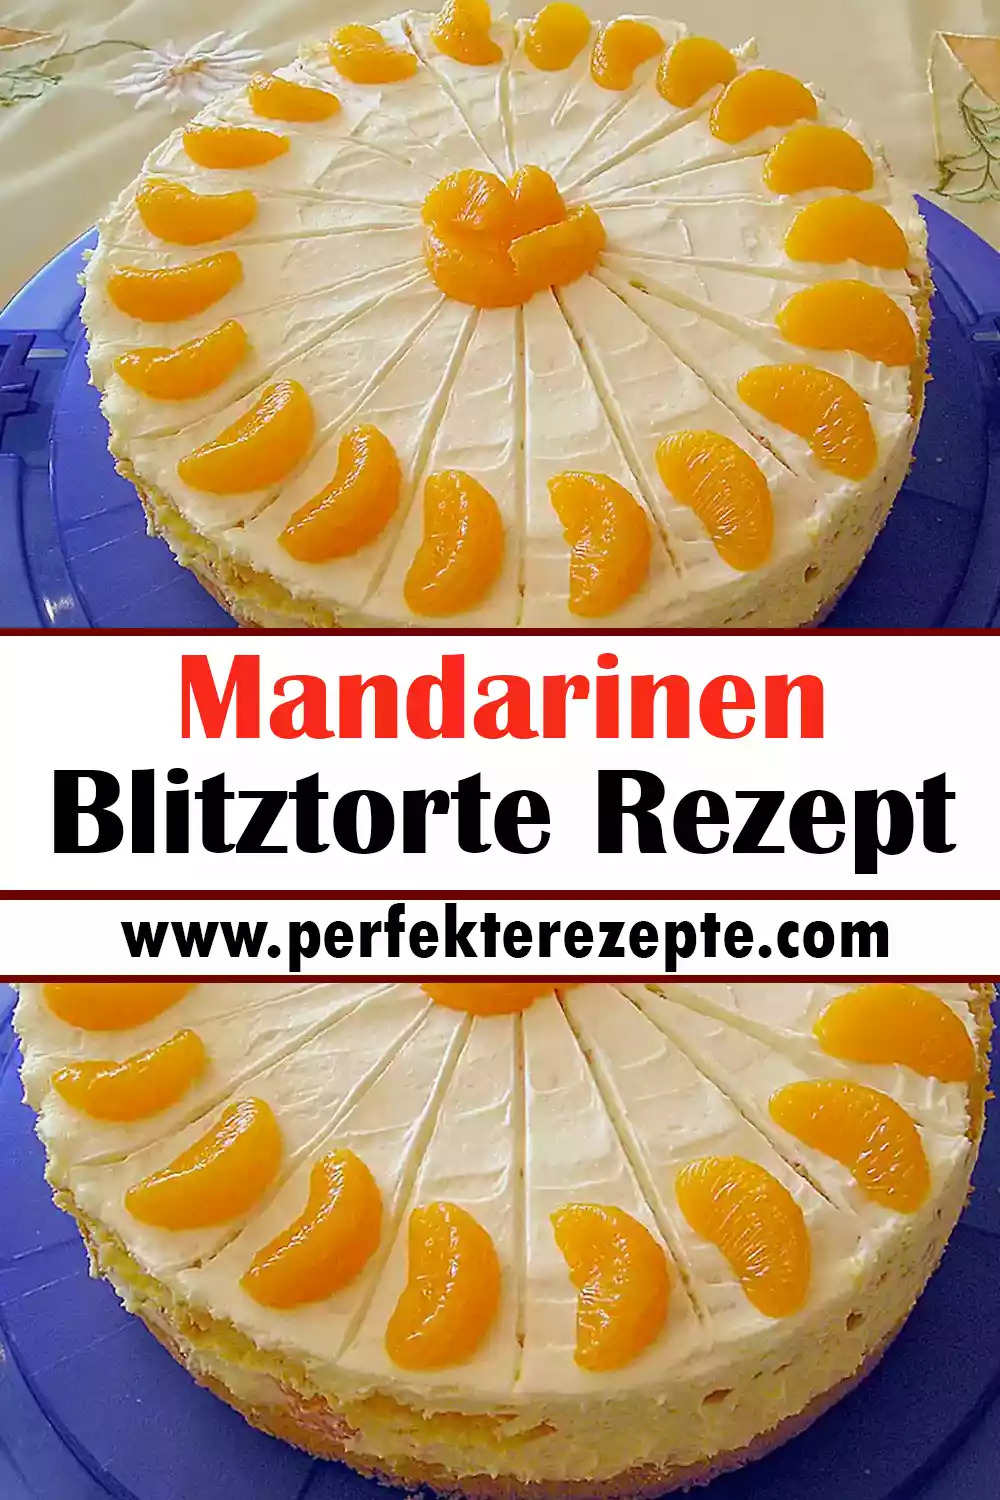 Mandarinen Blitztorte Rezept